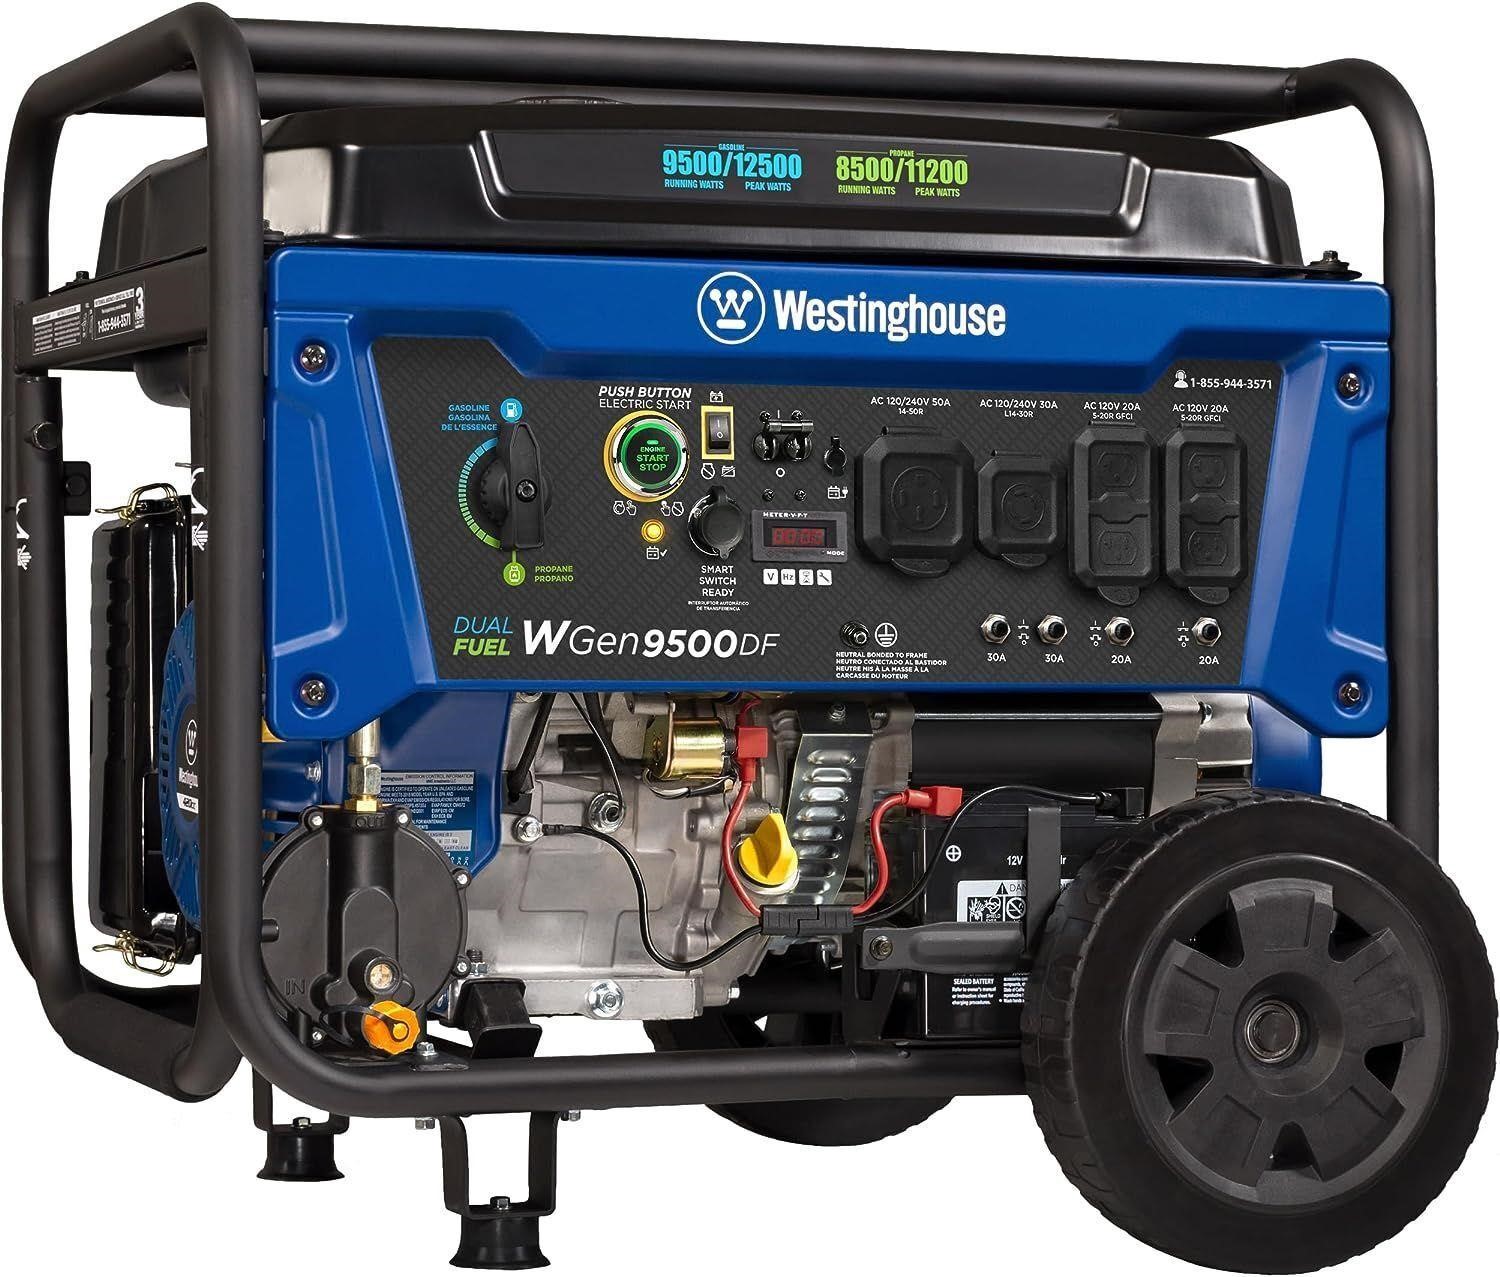 Westinghouse 12500 Watt Portable Generator